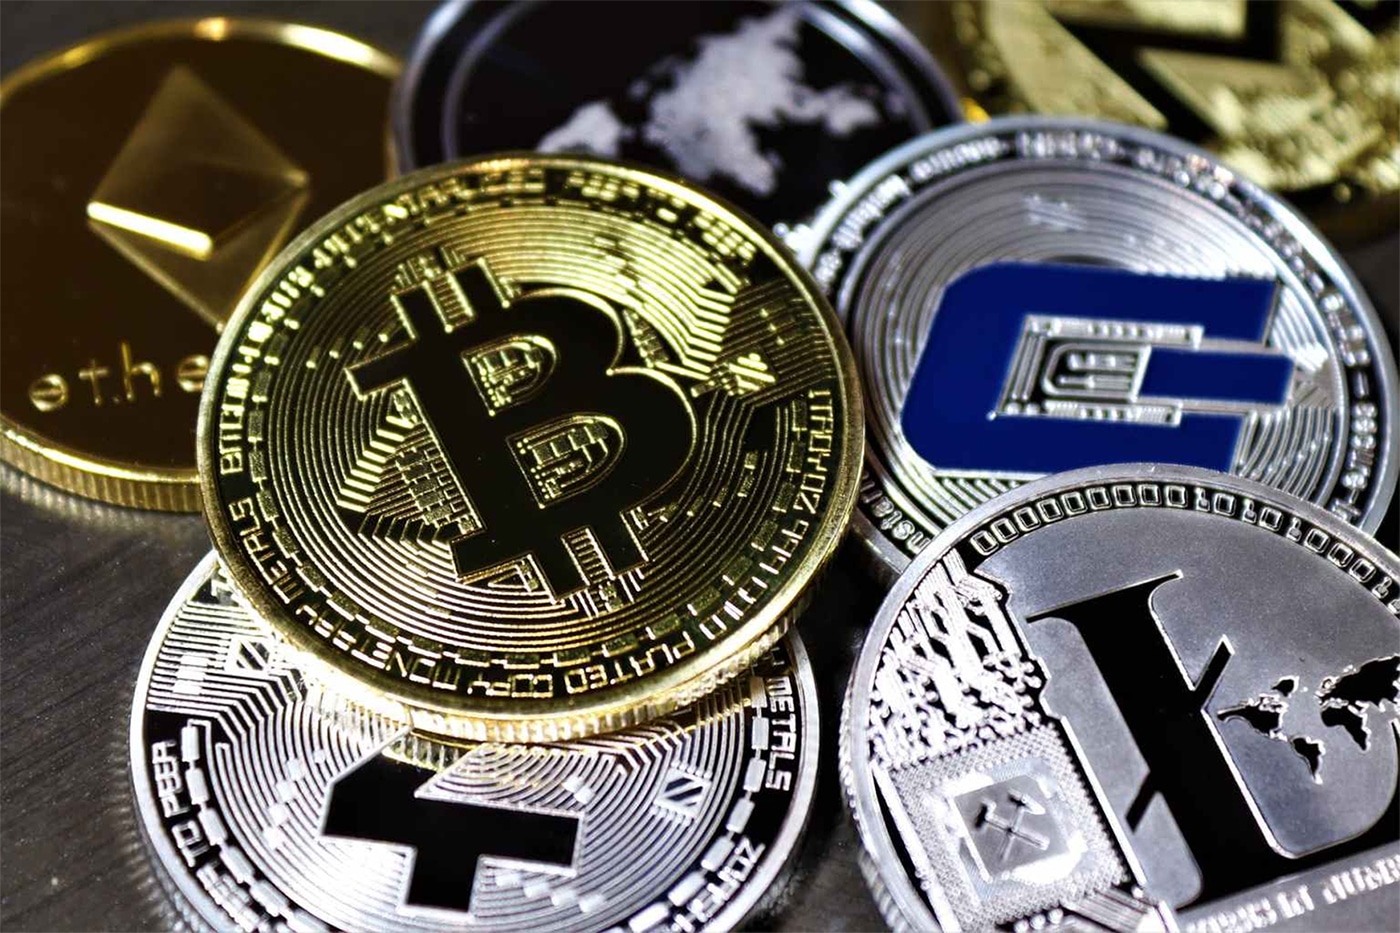 Cryptocurrencies, coins